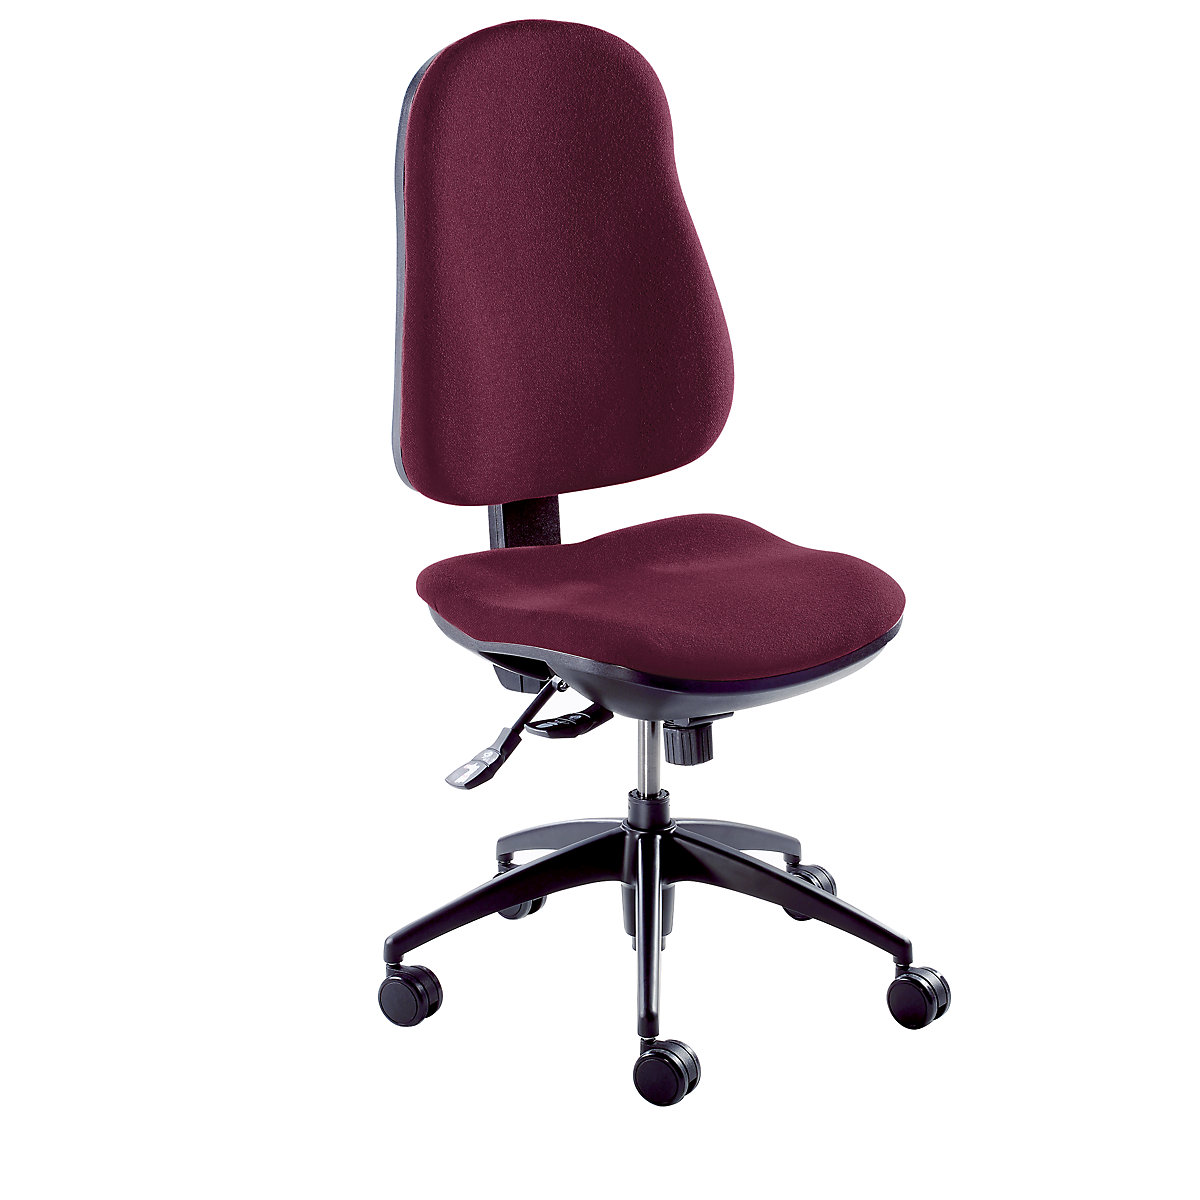 Ergonomic swivel chair – eurokraft pro, point synchronous mechanism, without arm rests, bordeaux covering-4